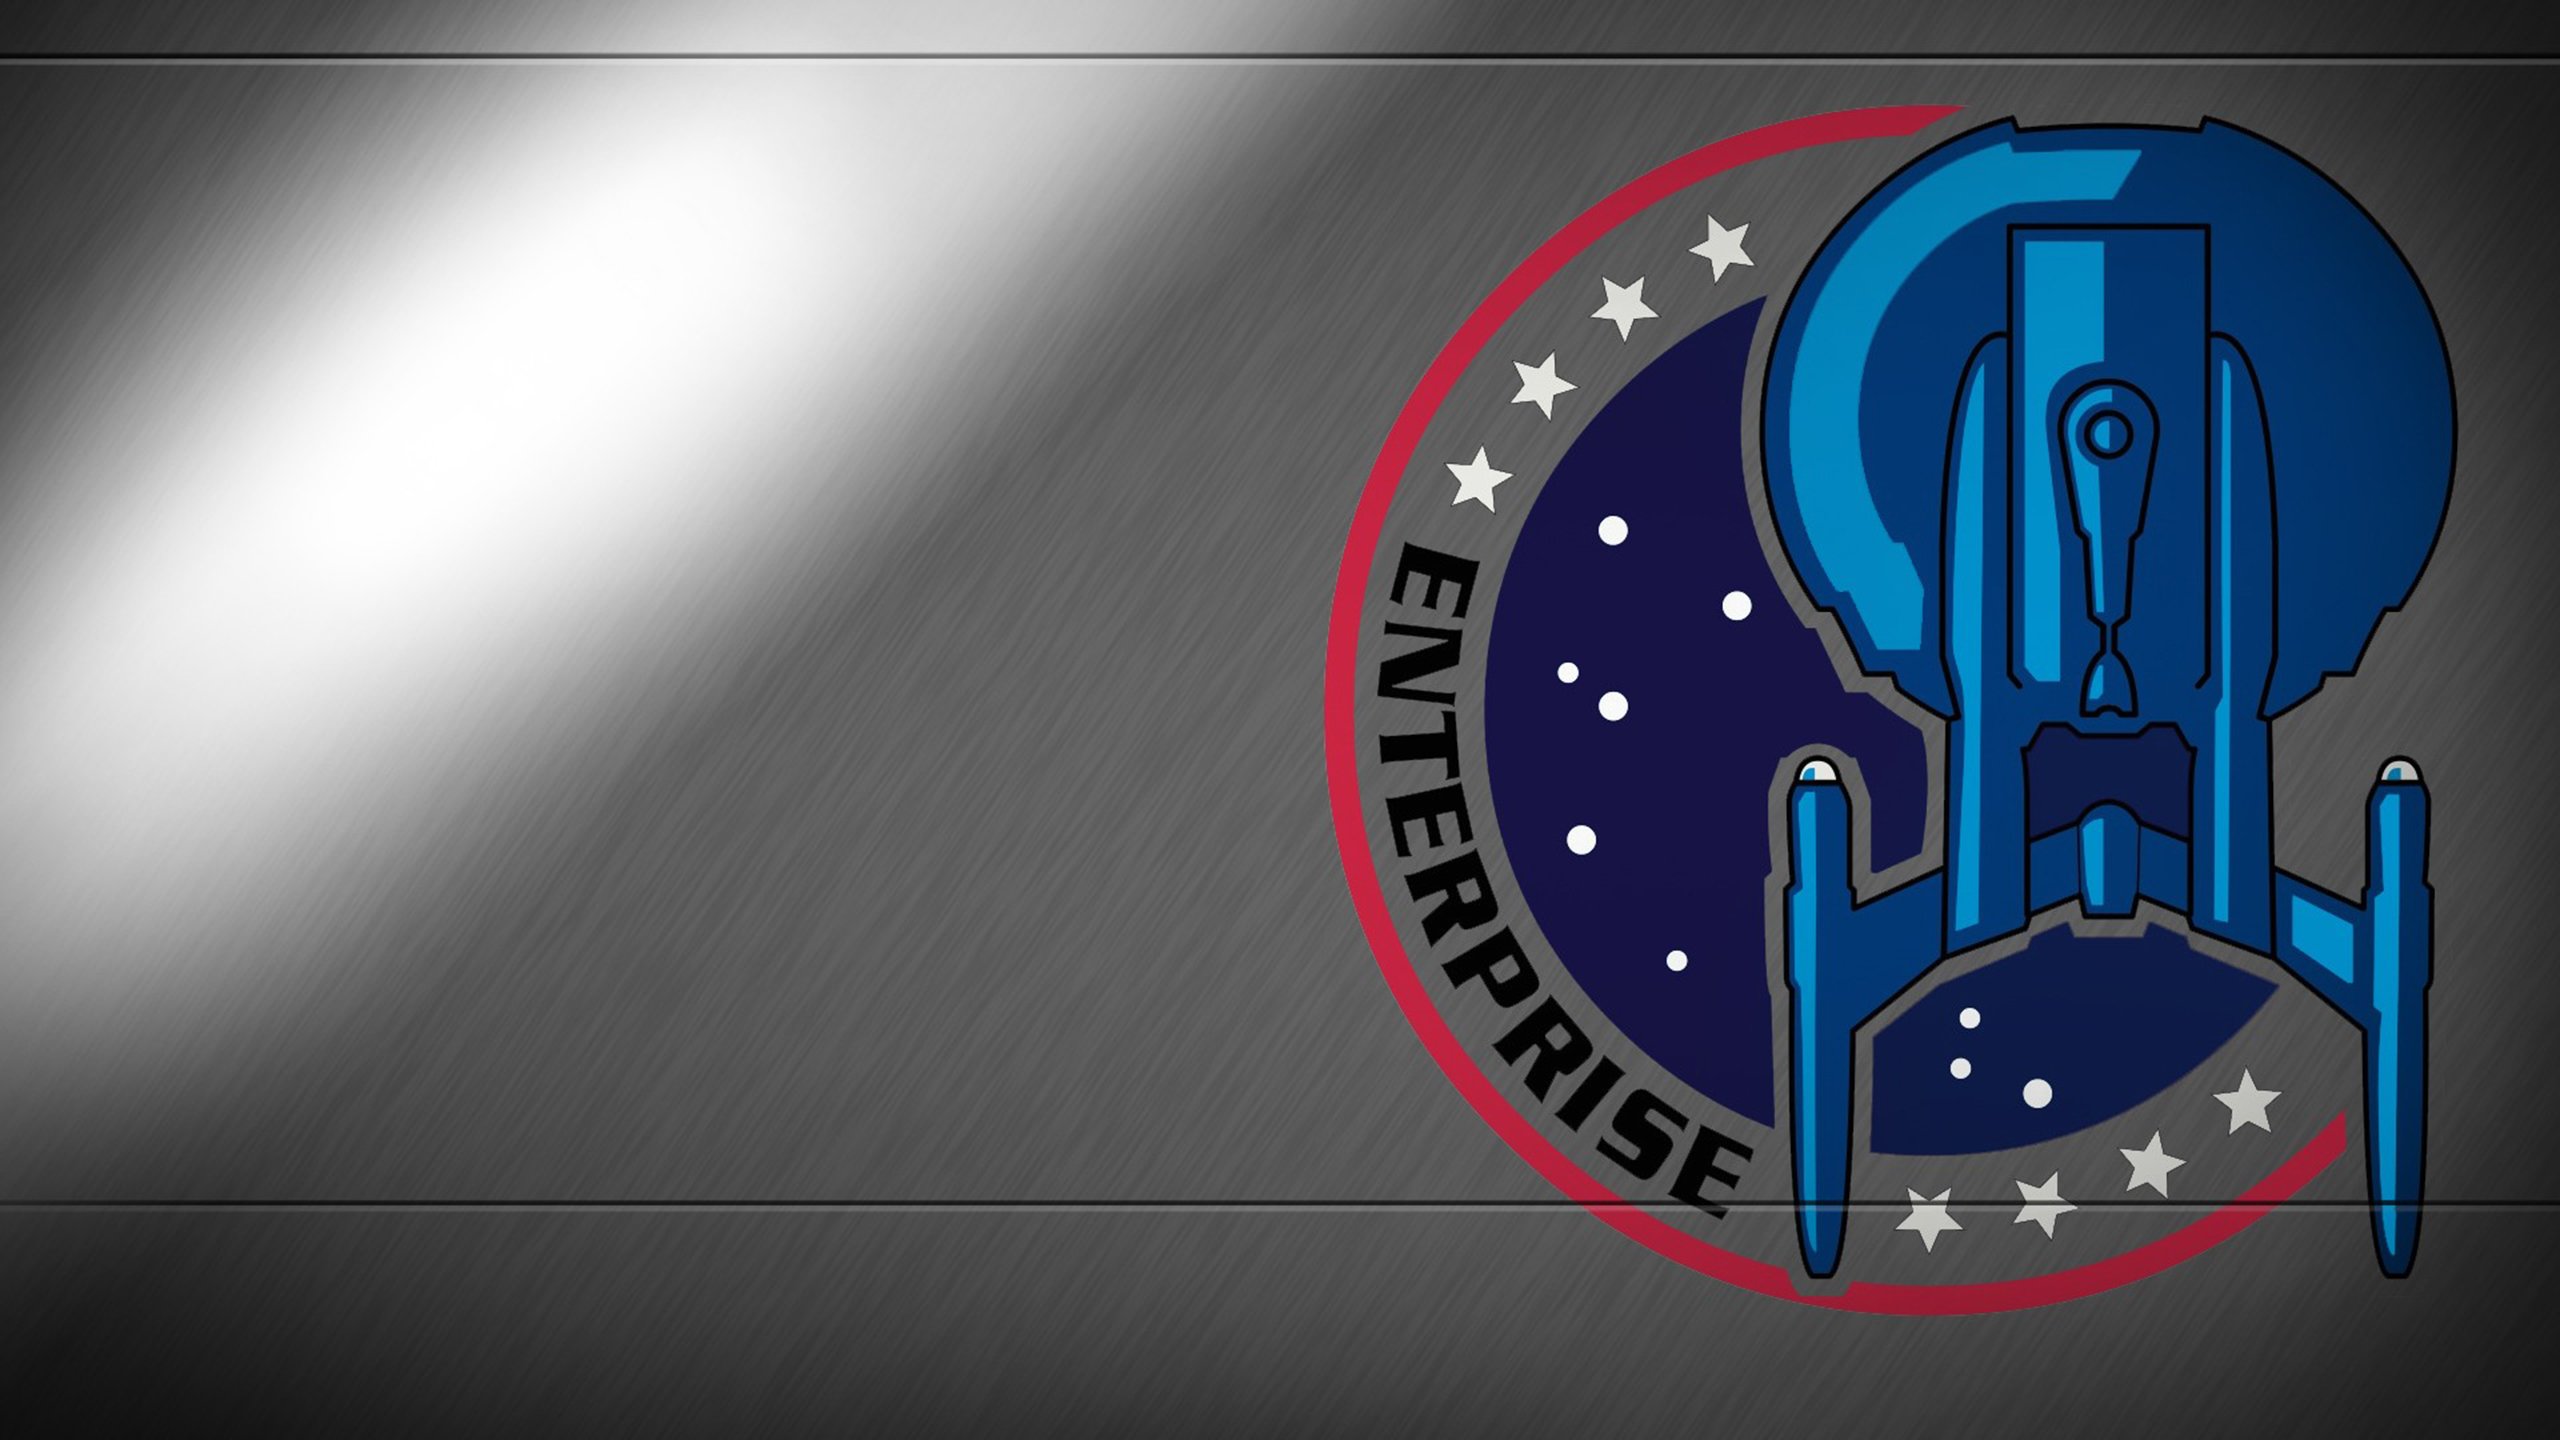 Star trek enterprise logo wallpapers hd desktop and mobile backgrounds